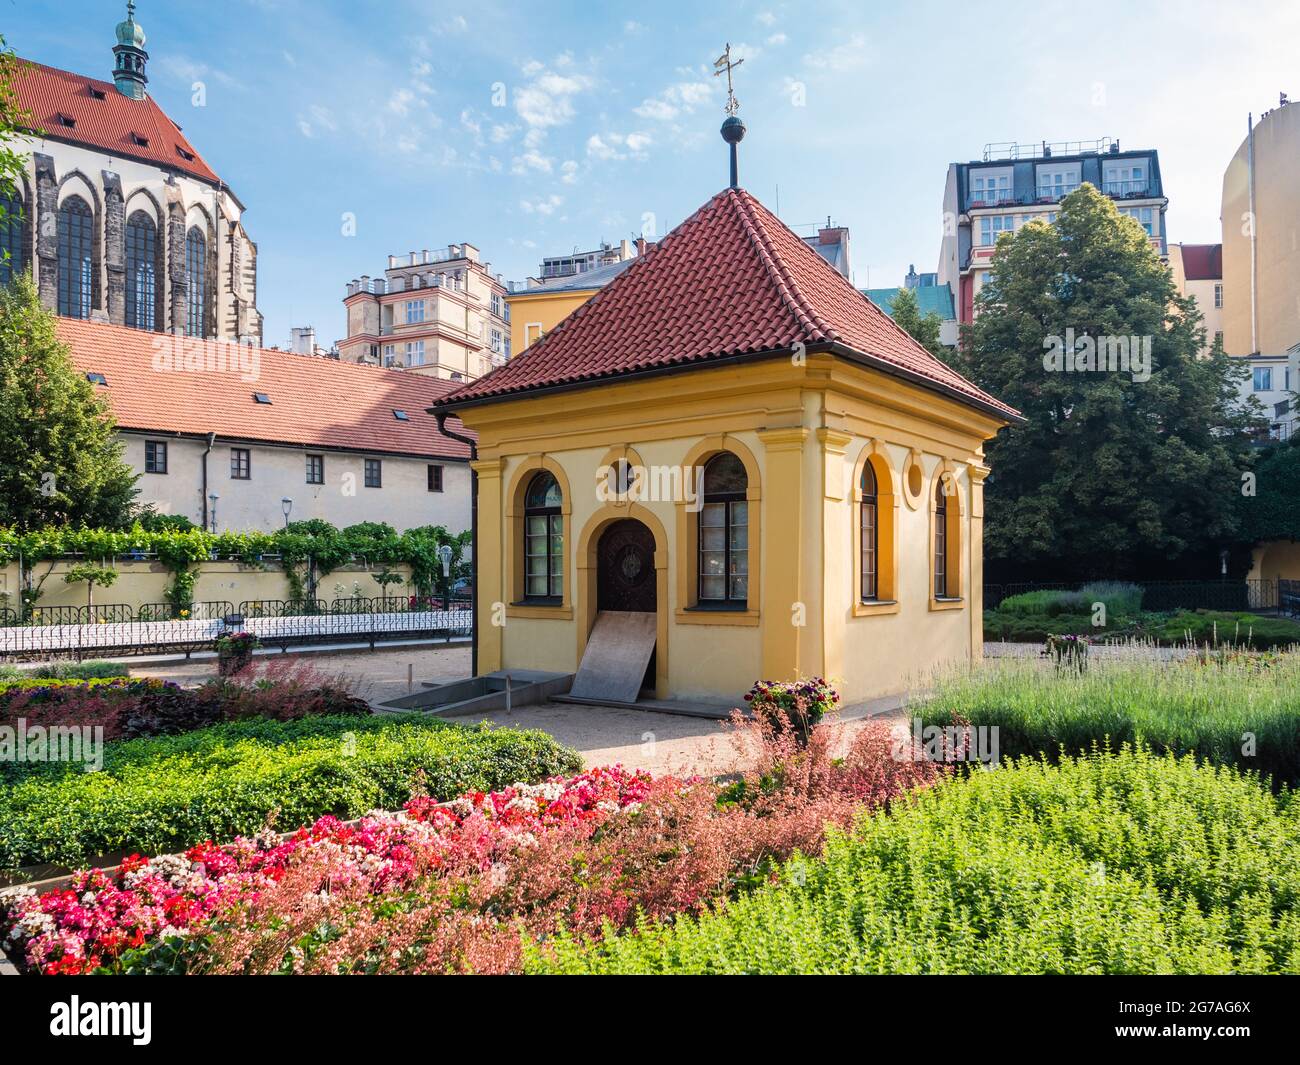 Franciscan Garden or Frantiskanska Zahrada in Prague, Czech Republic with a Yellow Pavilion and Flower Beds Stock Photo